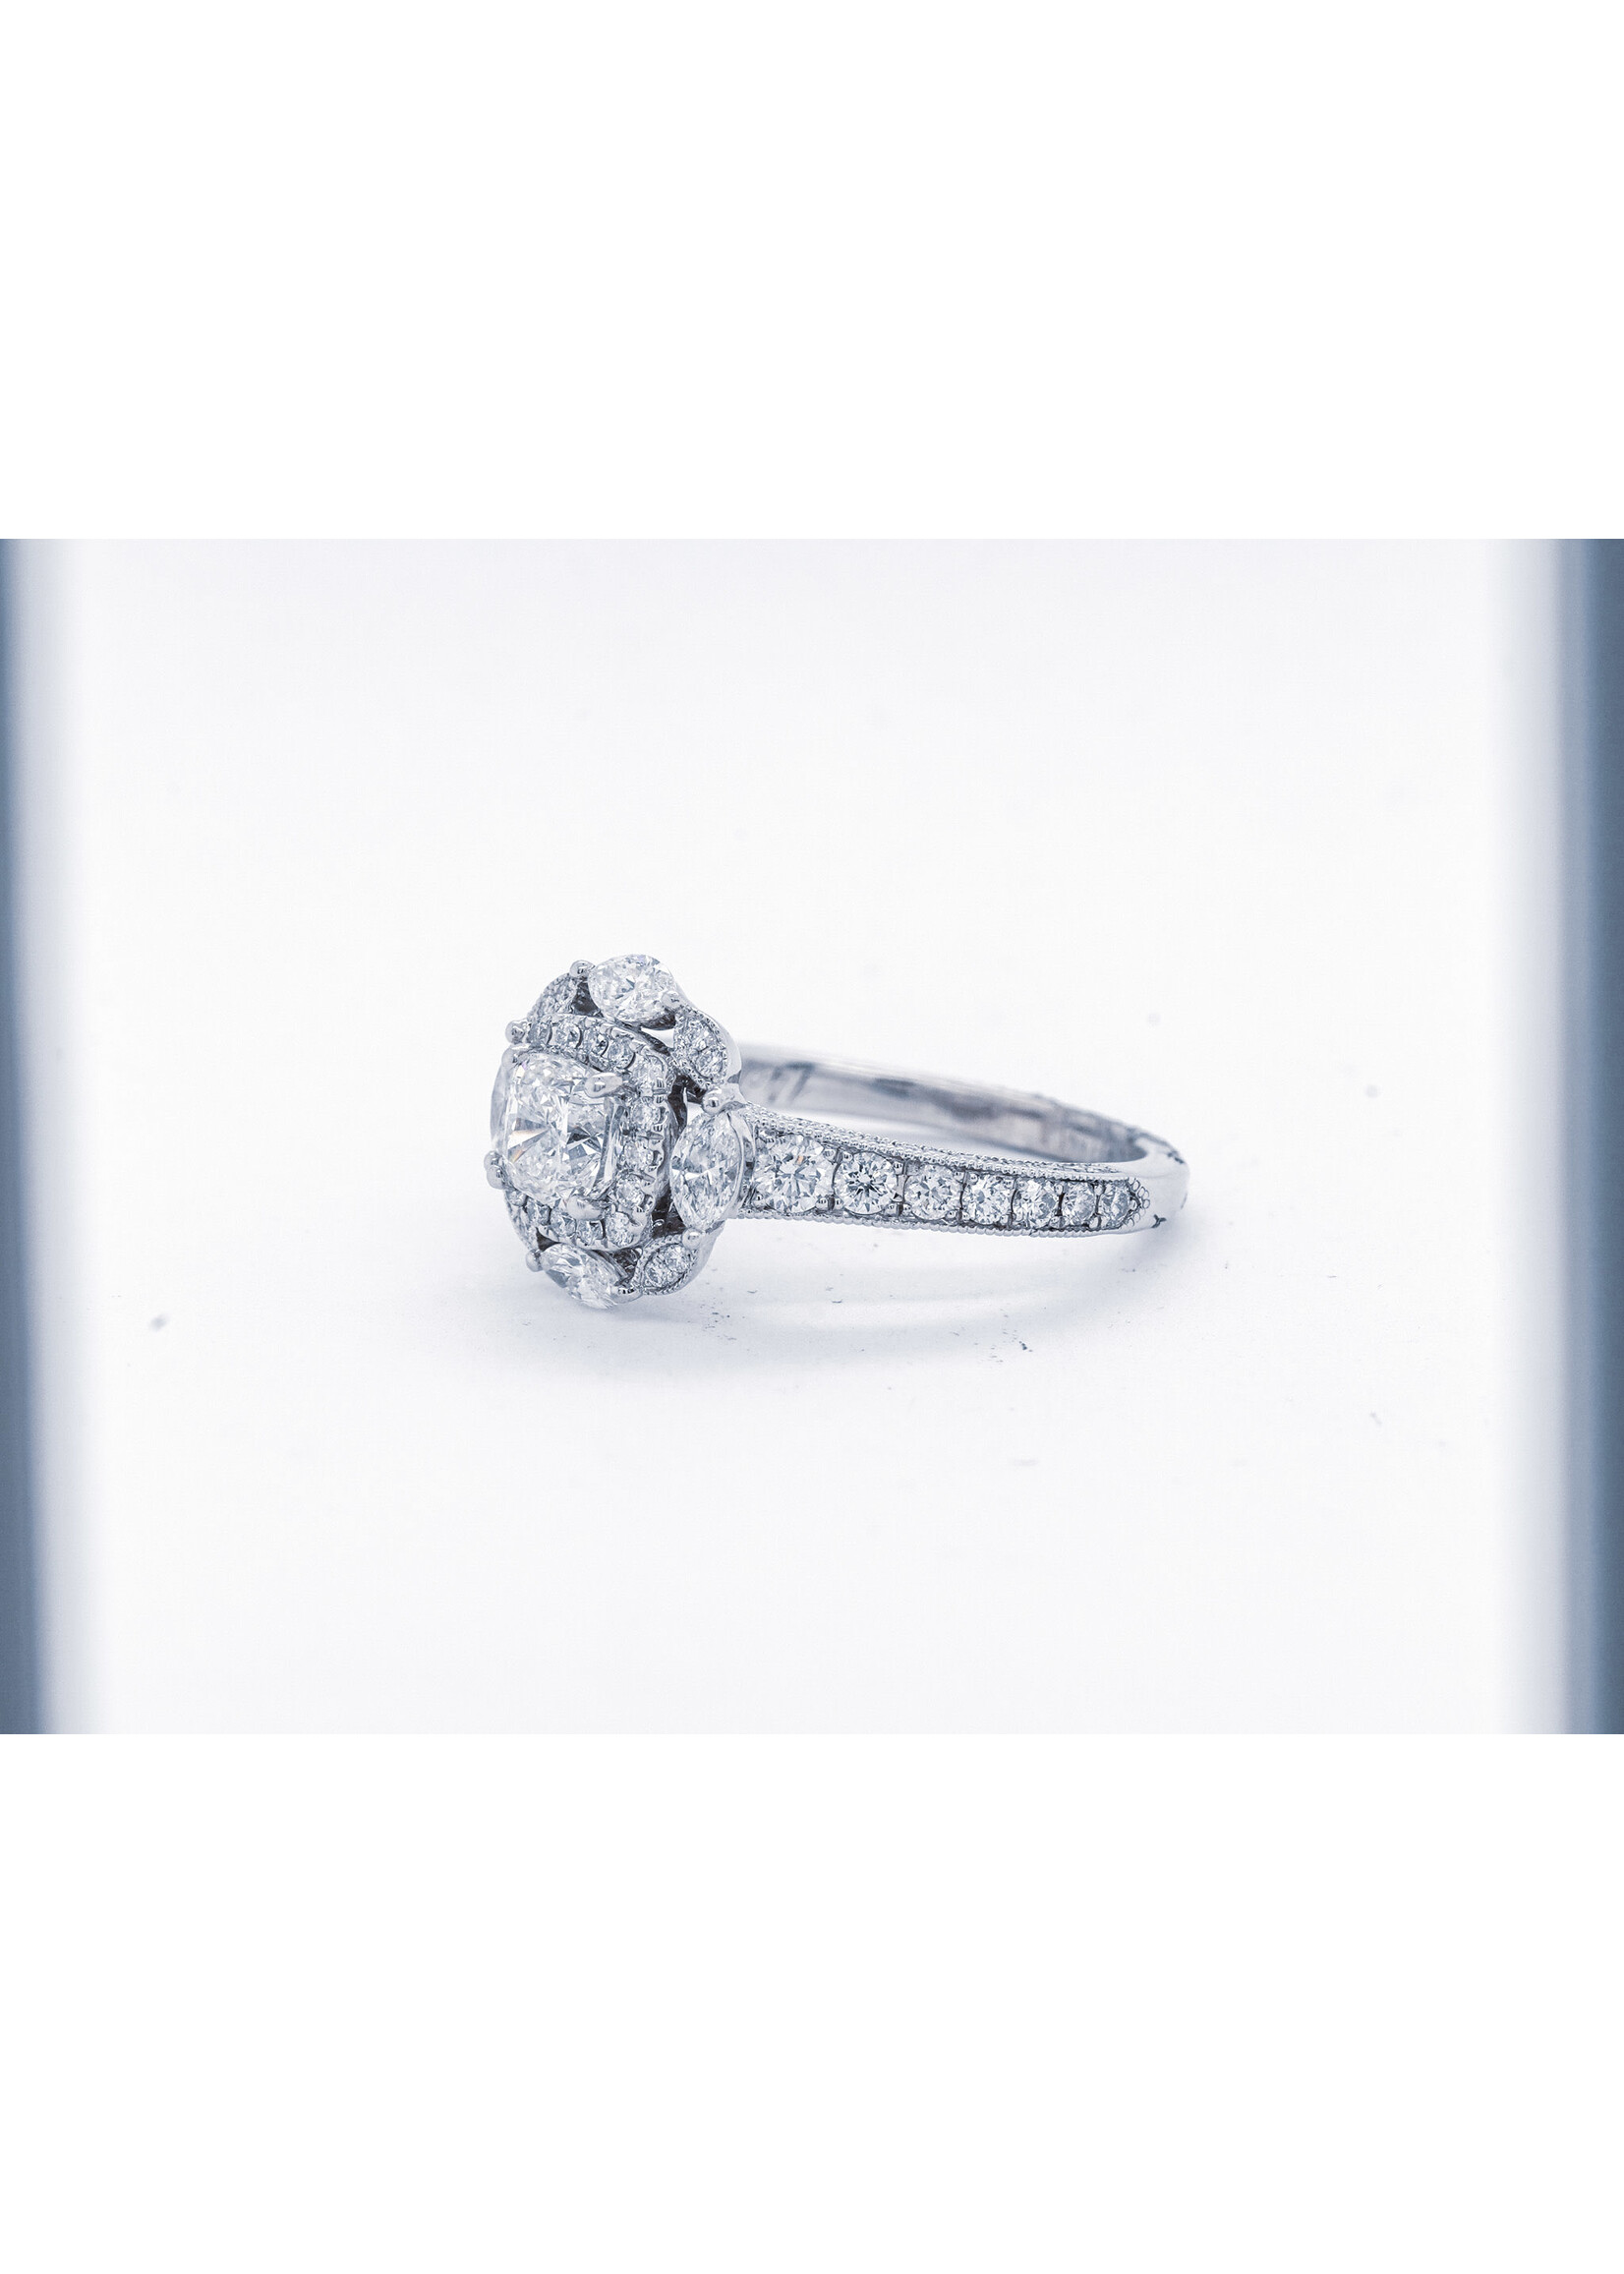 14KW 4.0g 1.73ctw (0.73ctr) G/SI2 Neil Lane Cushion Diamond Halo Engagement Ring (size 7)